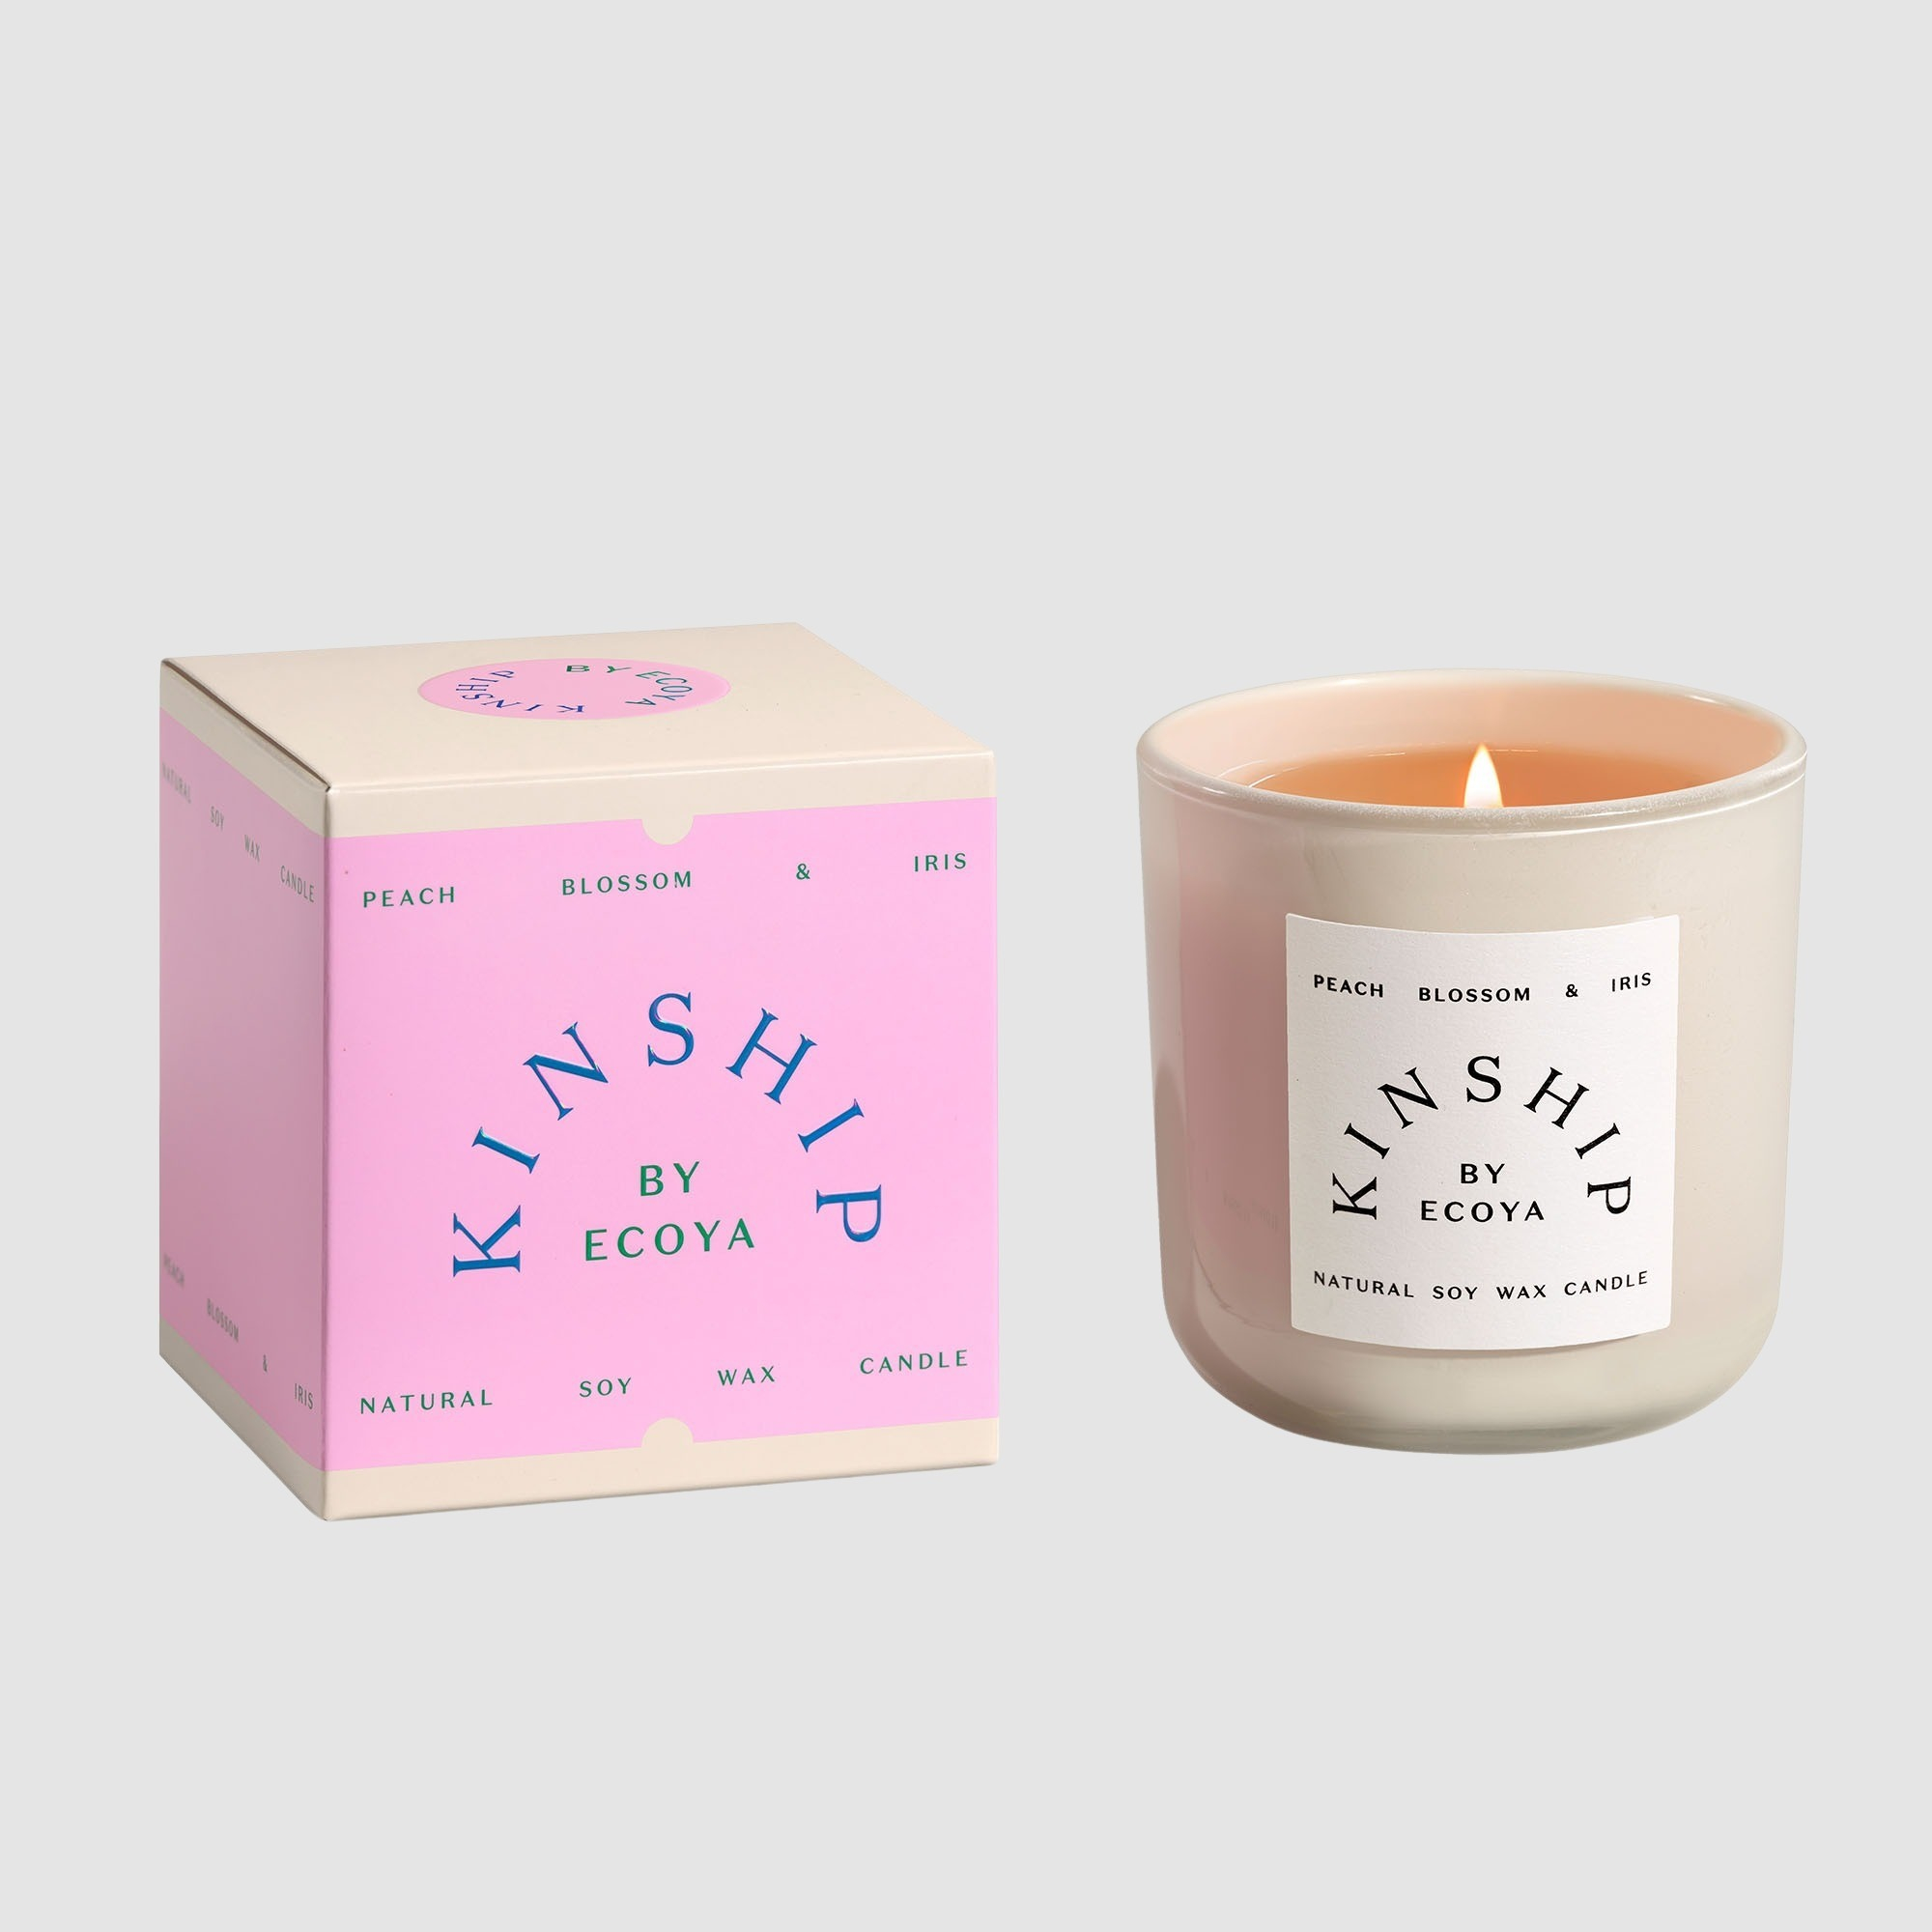 Kinship by Ecoya Peach Blossom & Iris Candle 375g